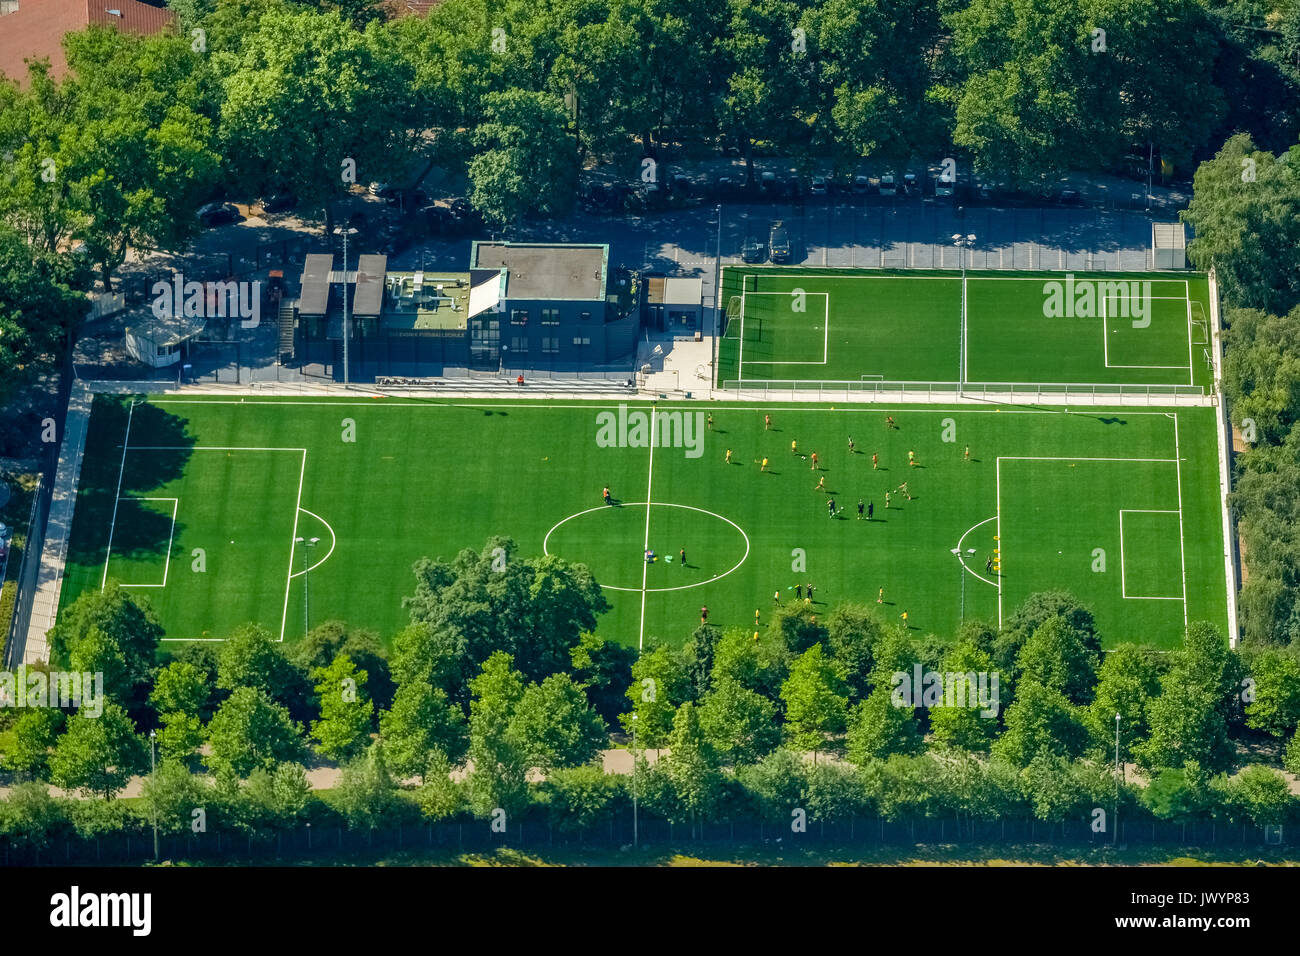 Football training at the Evonik football school next to the signalIdunaPark, Dortmund, Ruhr area, North Rhine-Westphalia, Germany, Dortmund, Europe, a Stock Photo